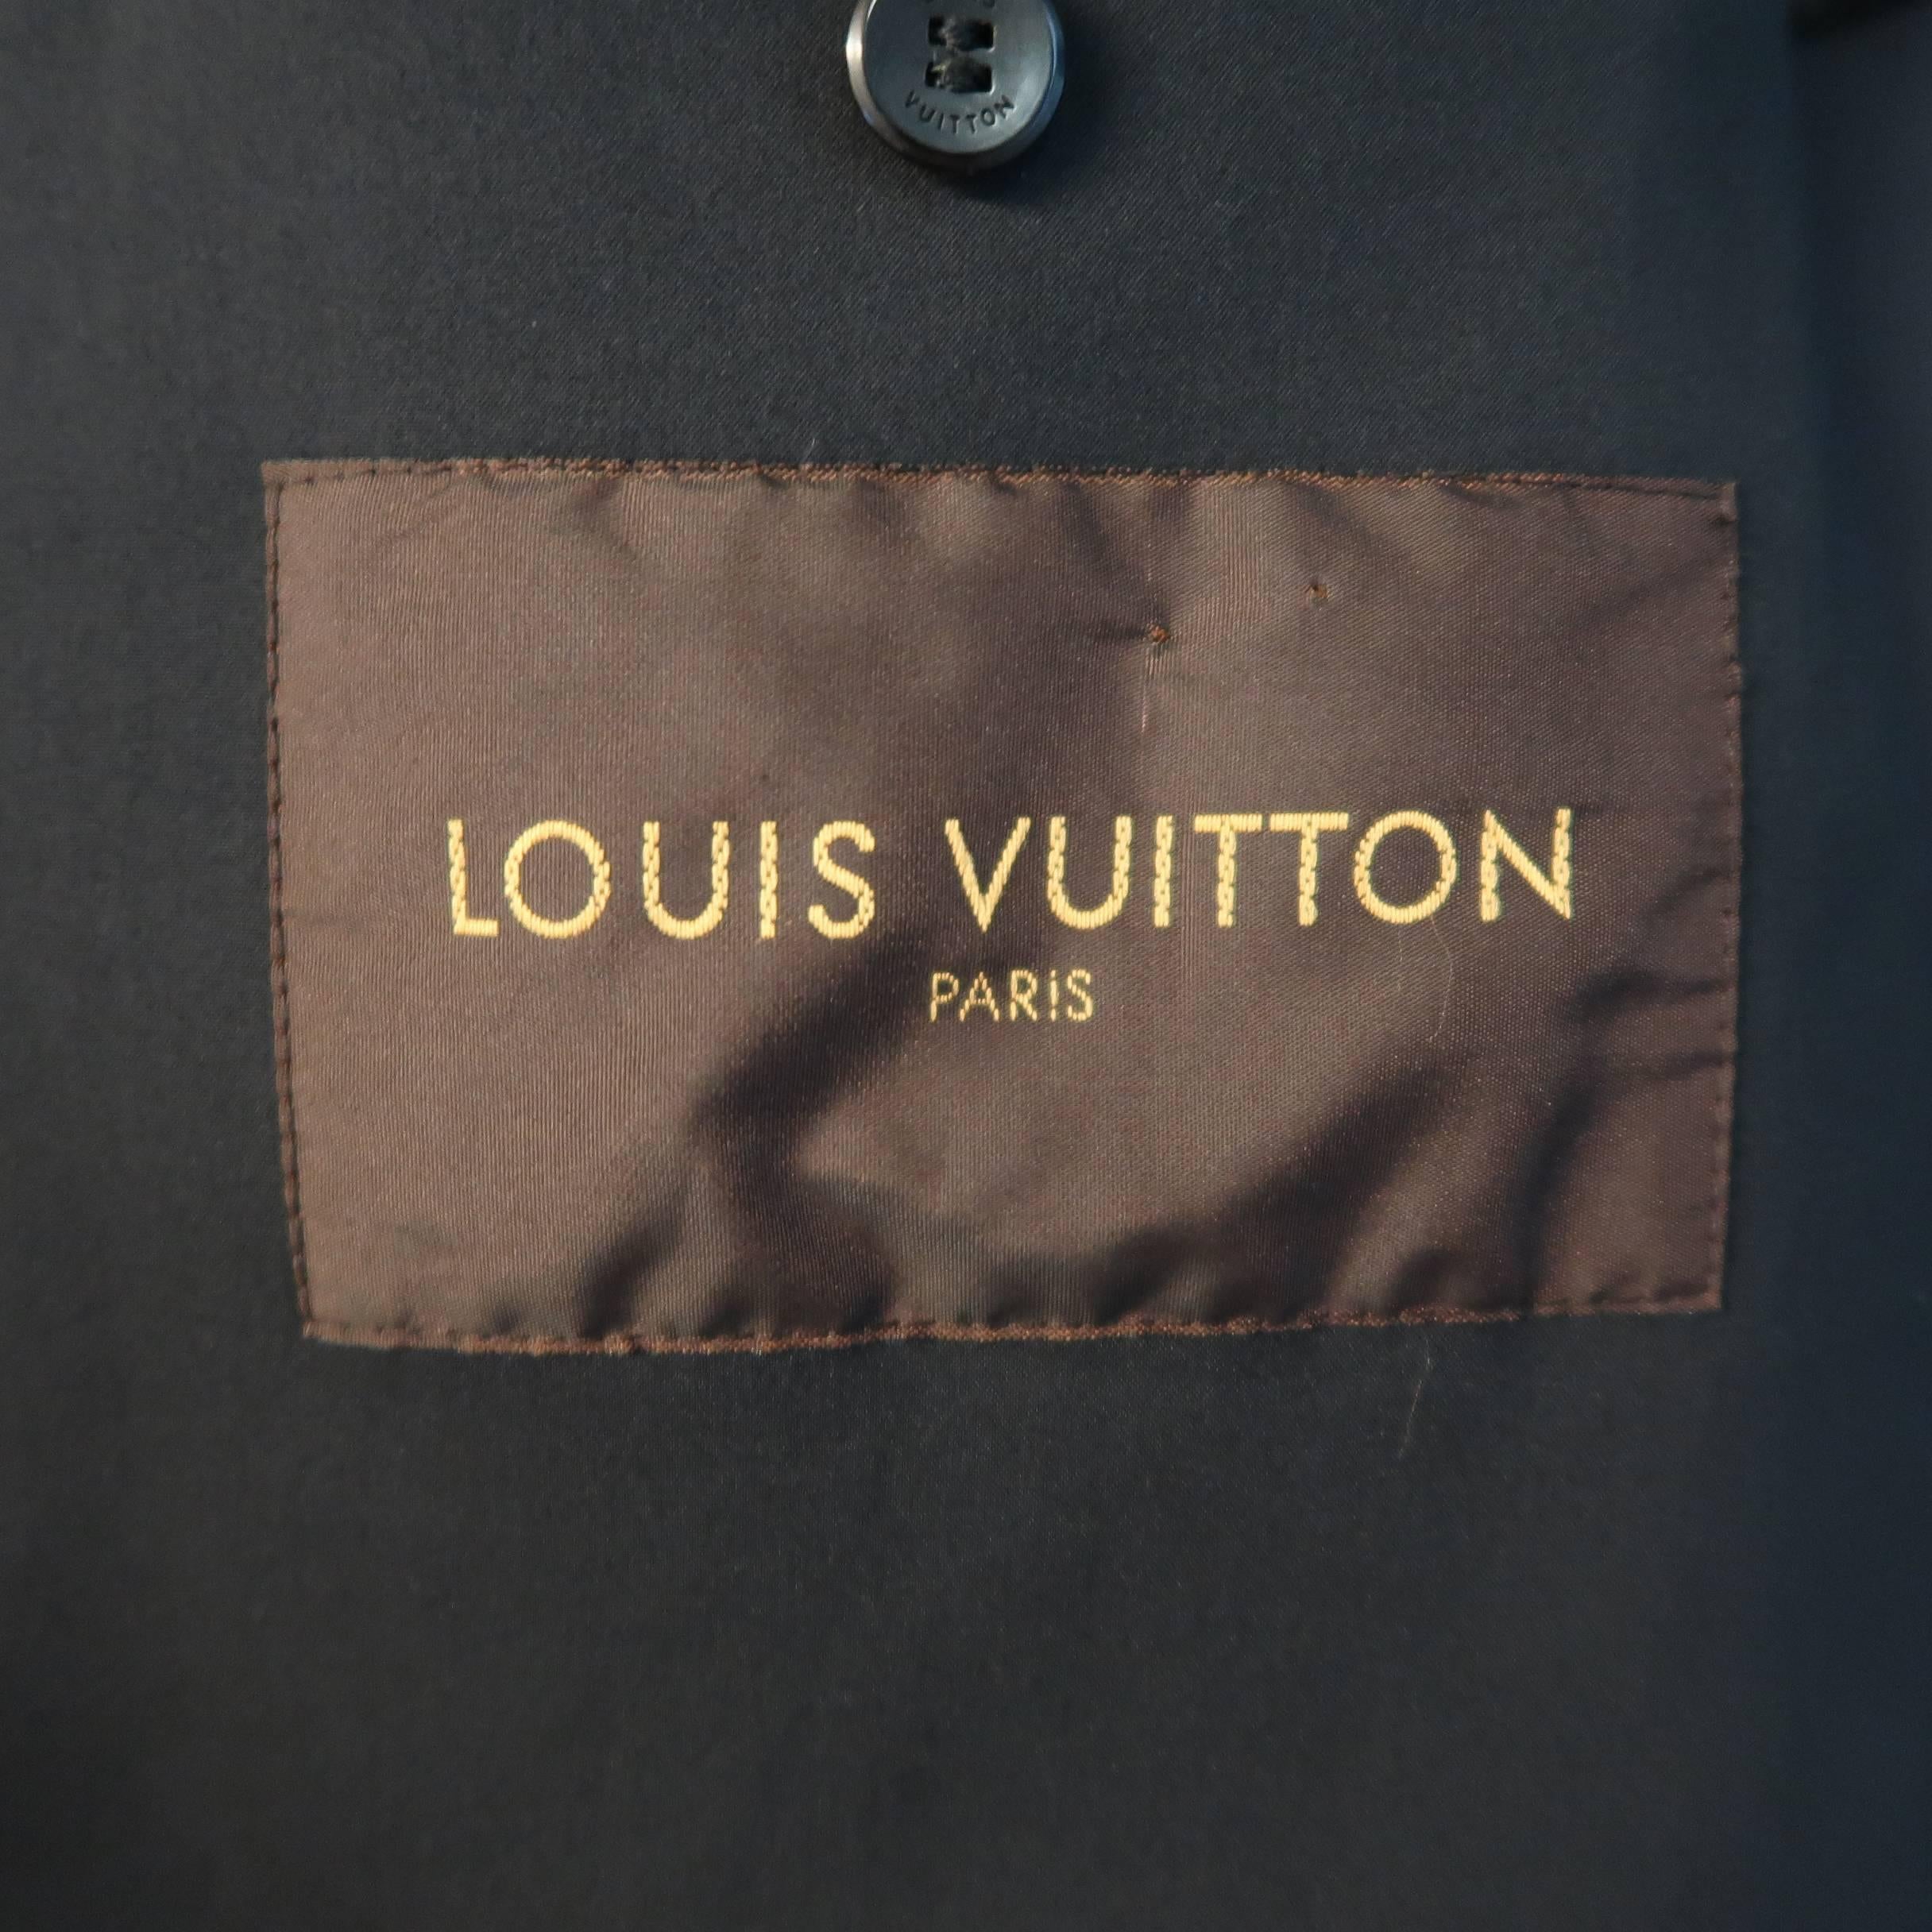 Men's LOUIS VUITTON Coat 40 Midnight Navy Coated Cotton Collared Car Jacket 1